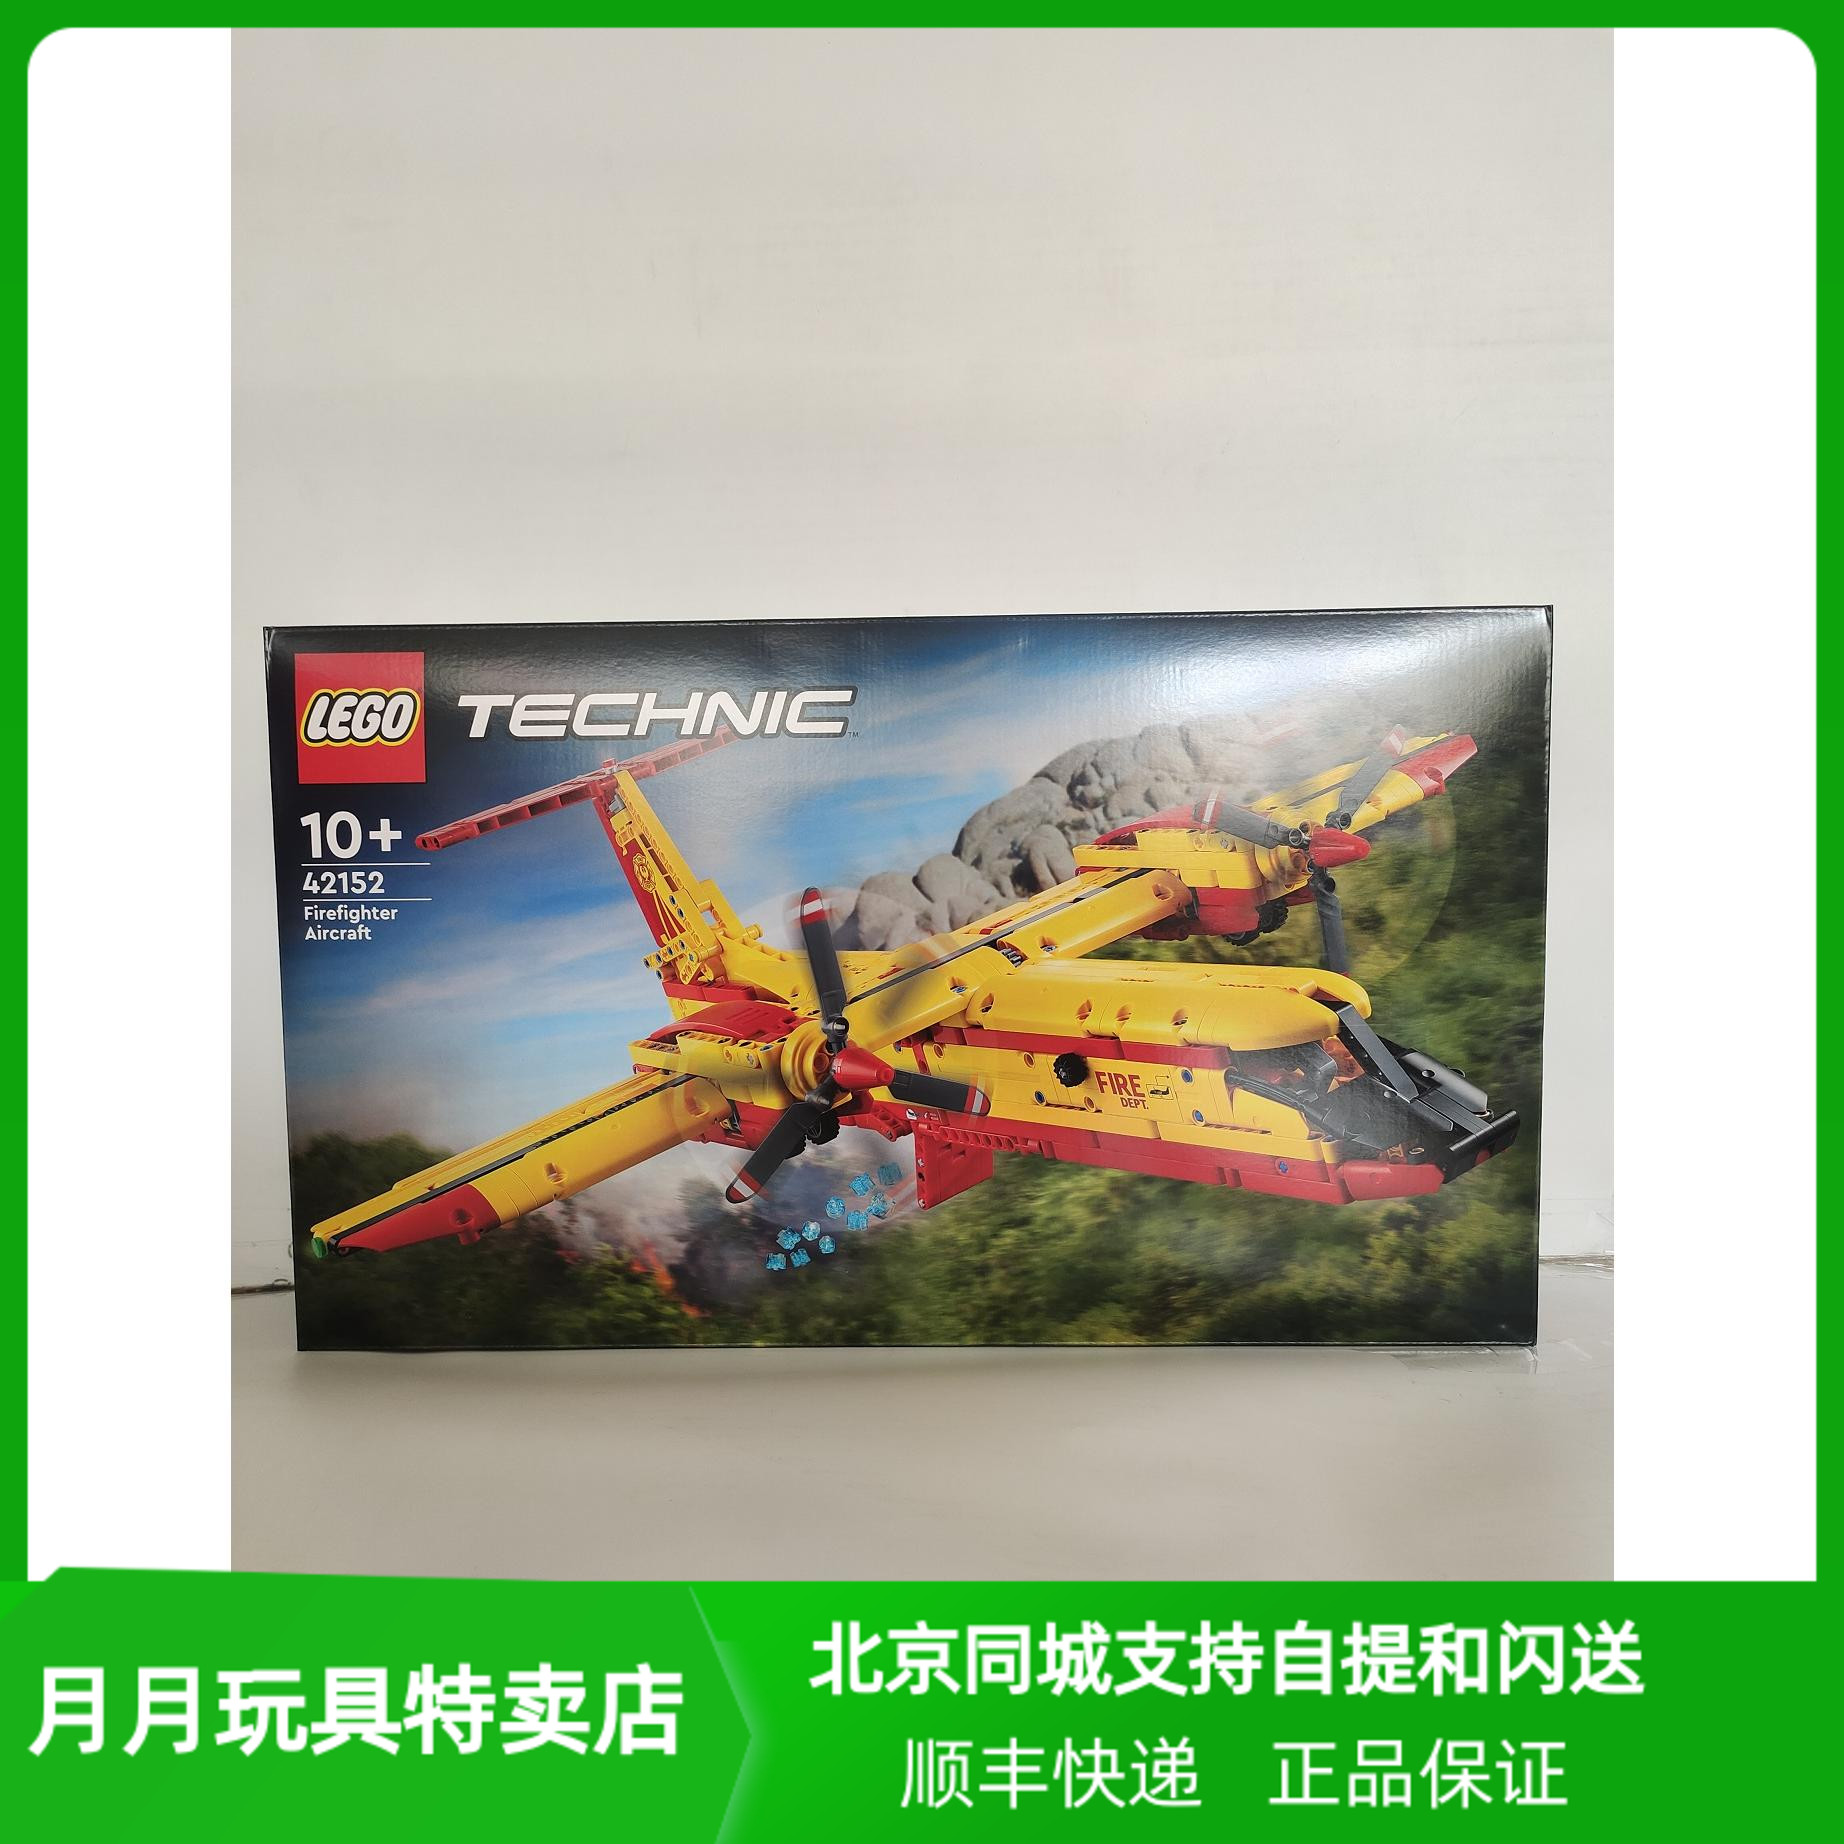 LEGO乐高42152科技系列消防飞机儿童益智礼物男女生拼装积木玩具